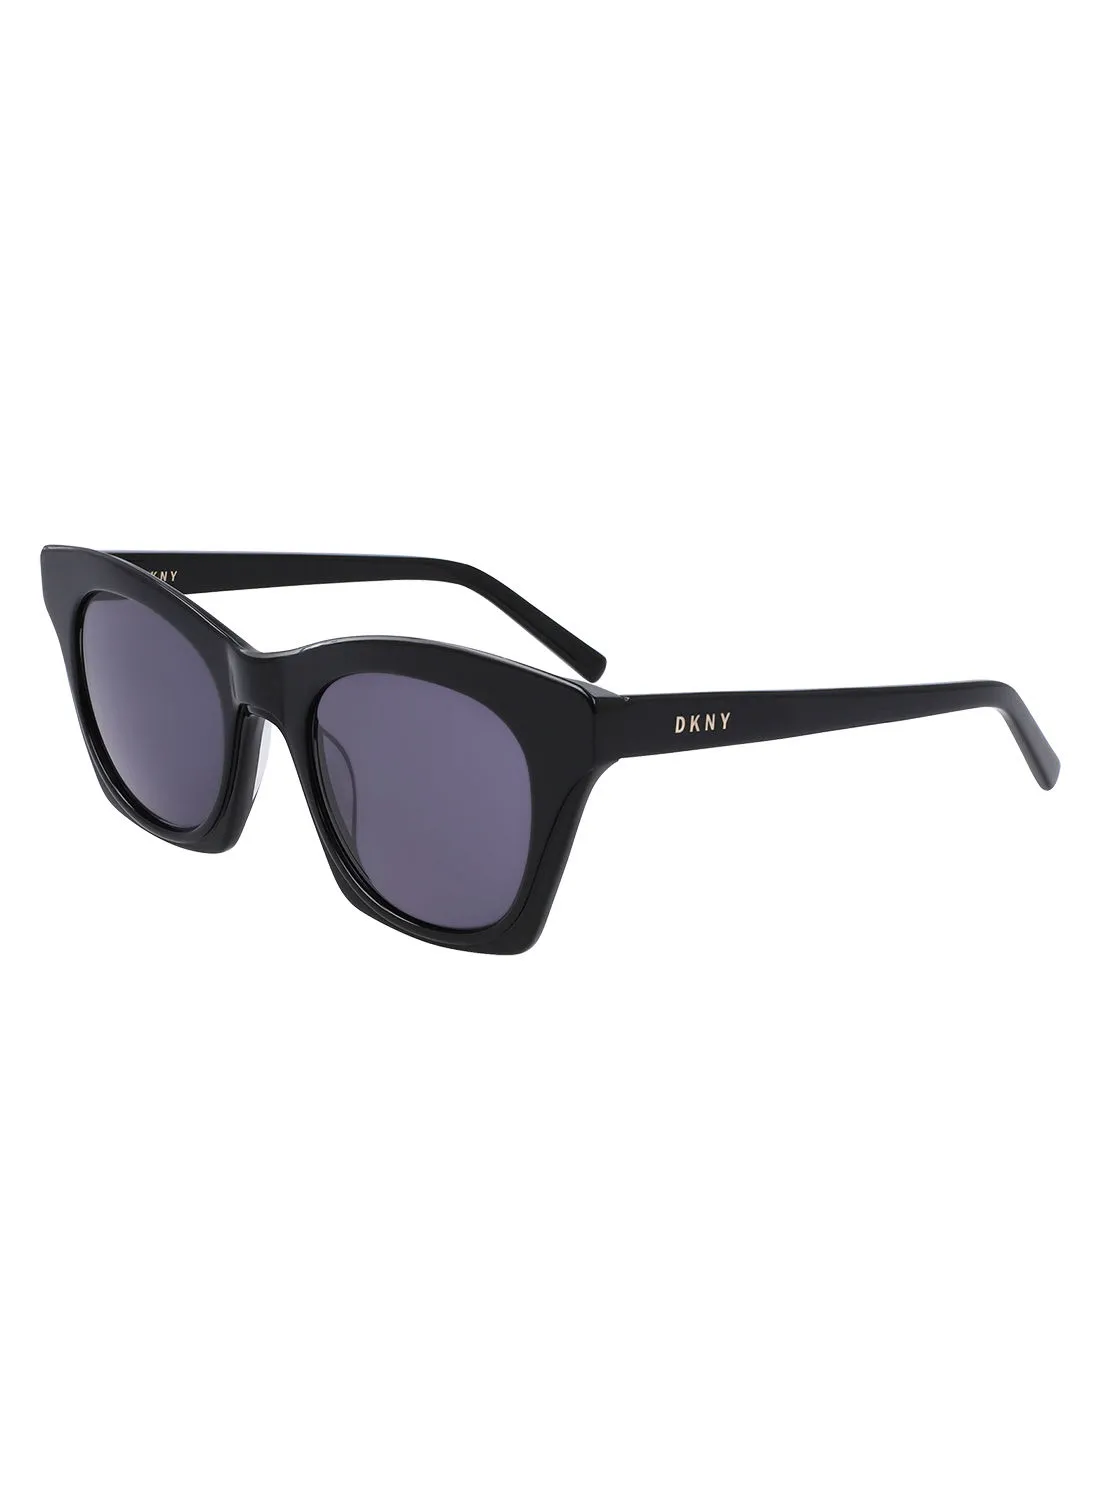 DKNY Full Rim Acetate Cat Eye Sunglasses DK541S-001-5121